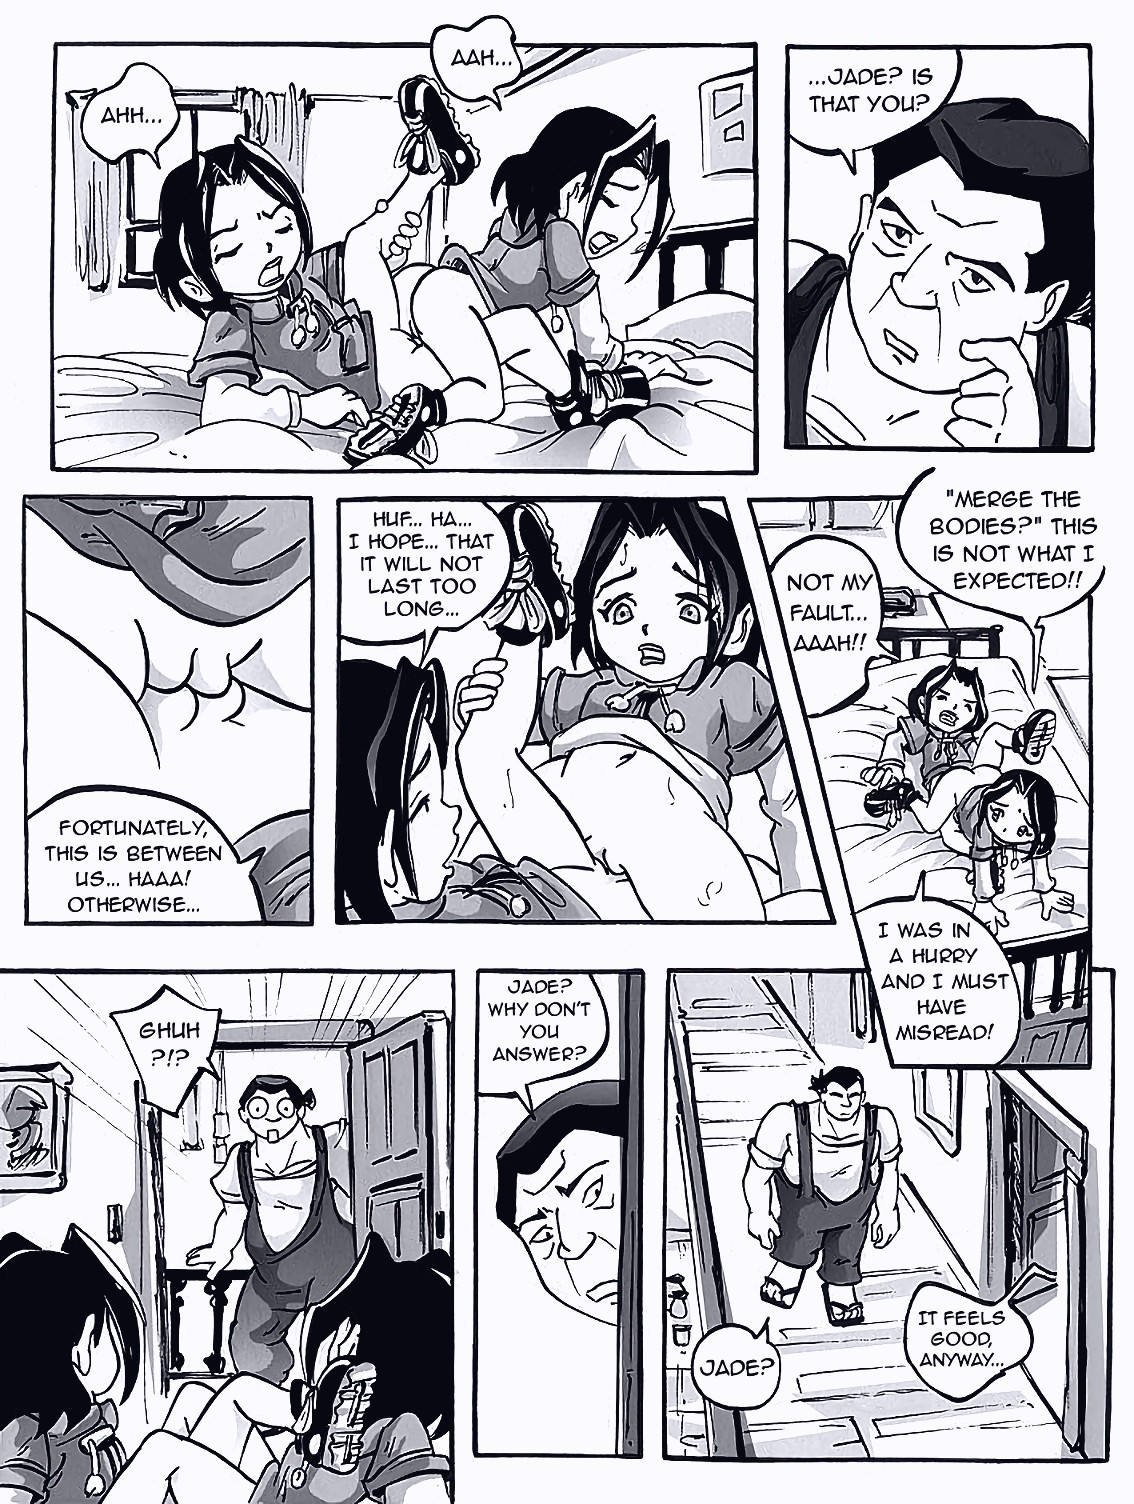 Jade Adventure porn comic page 030